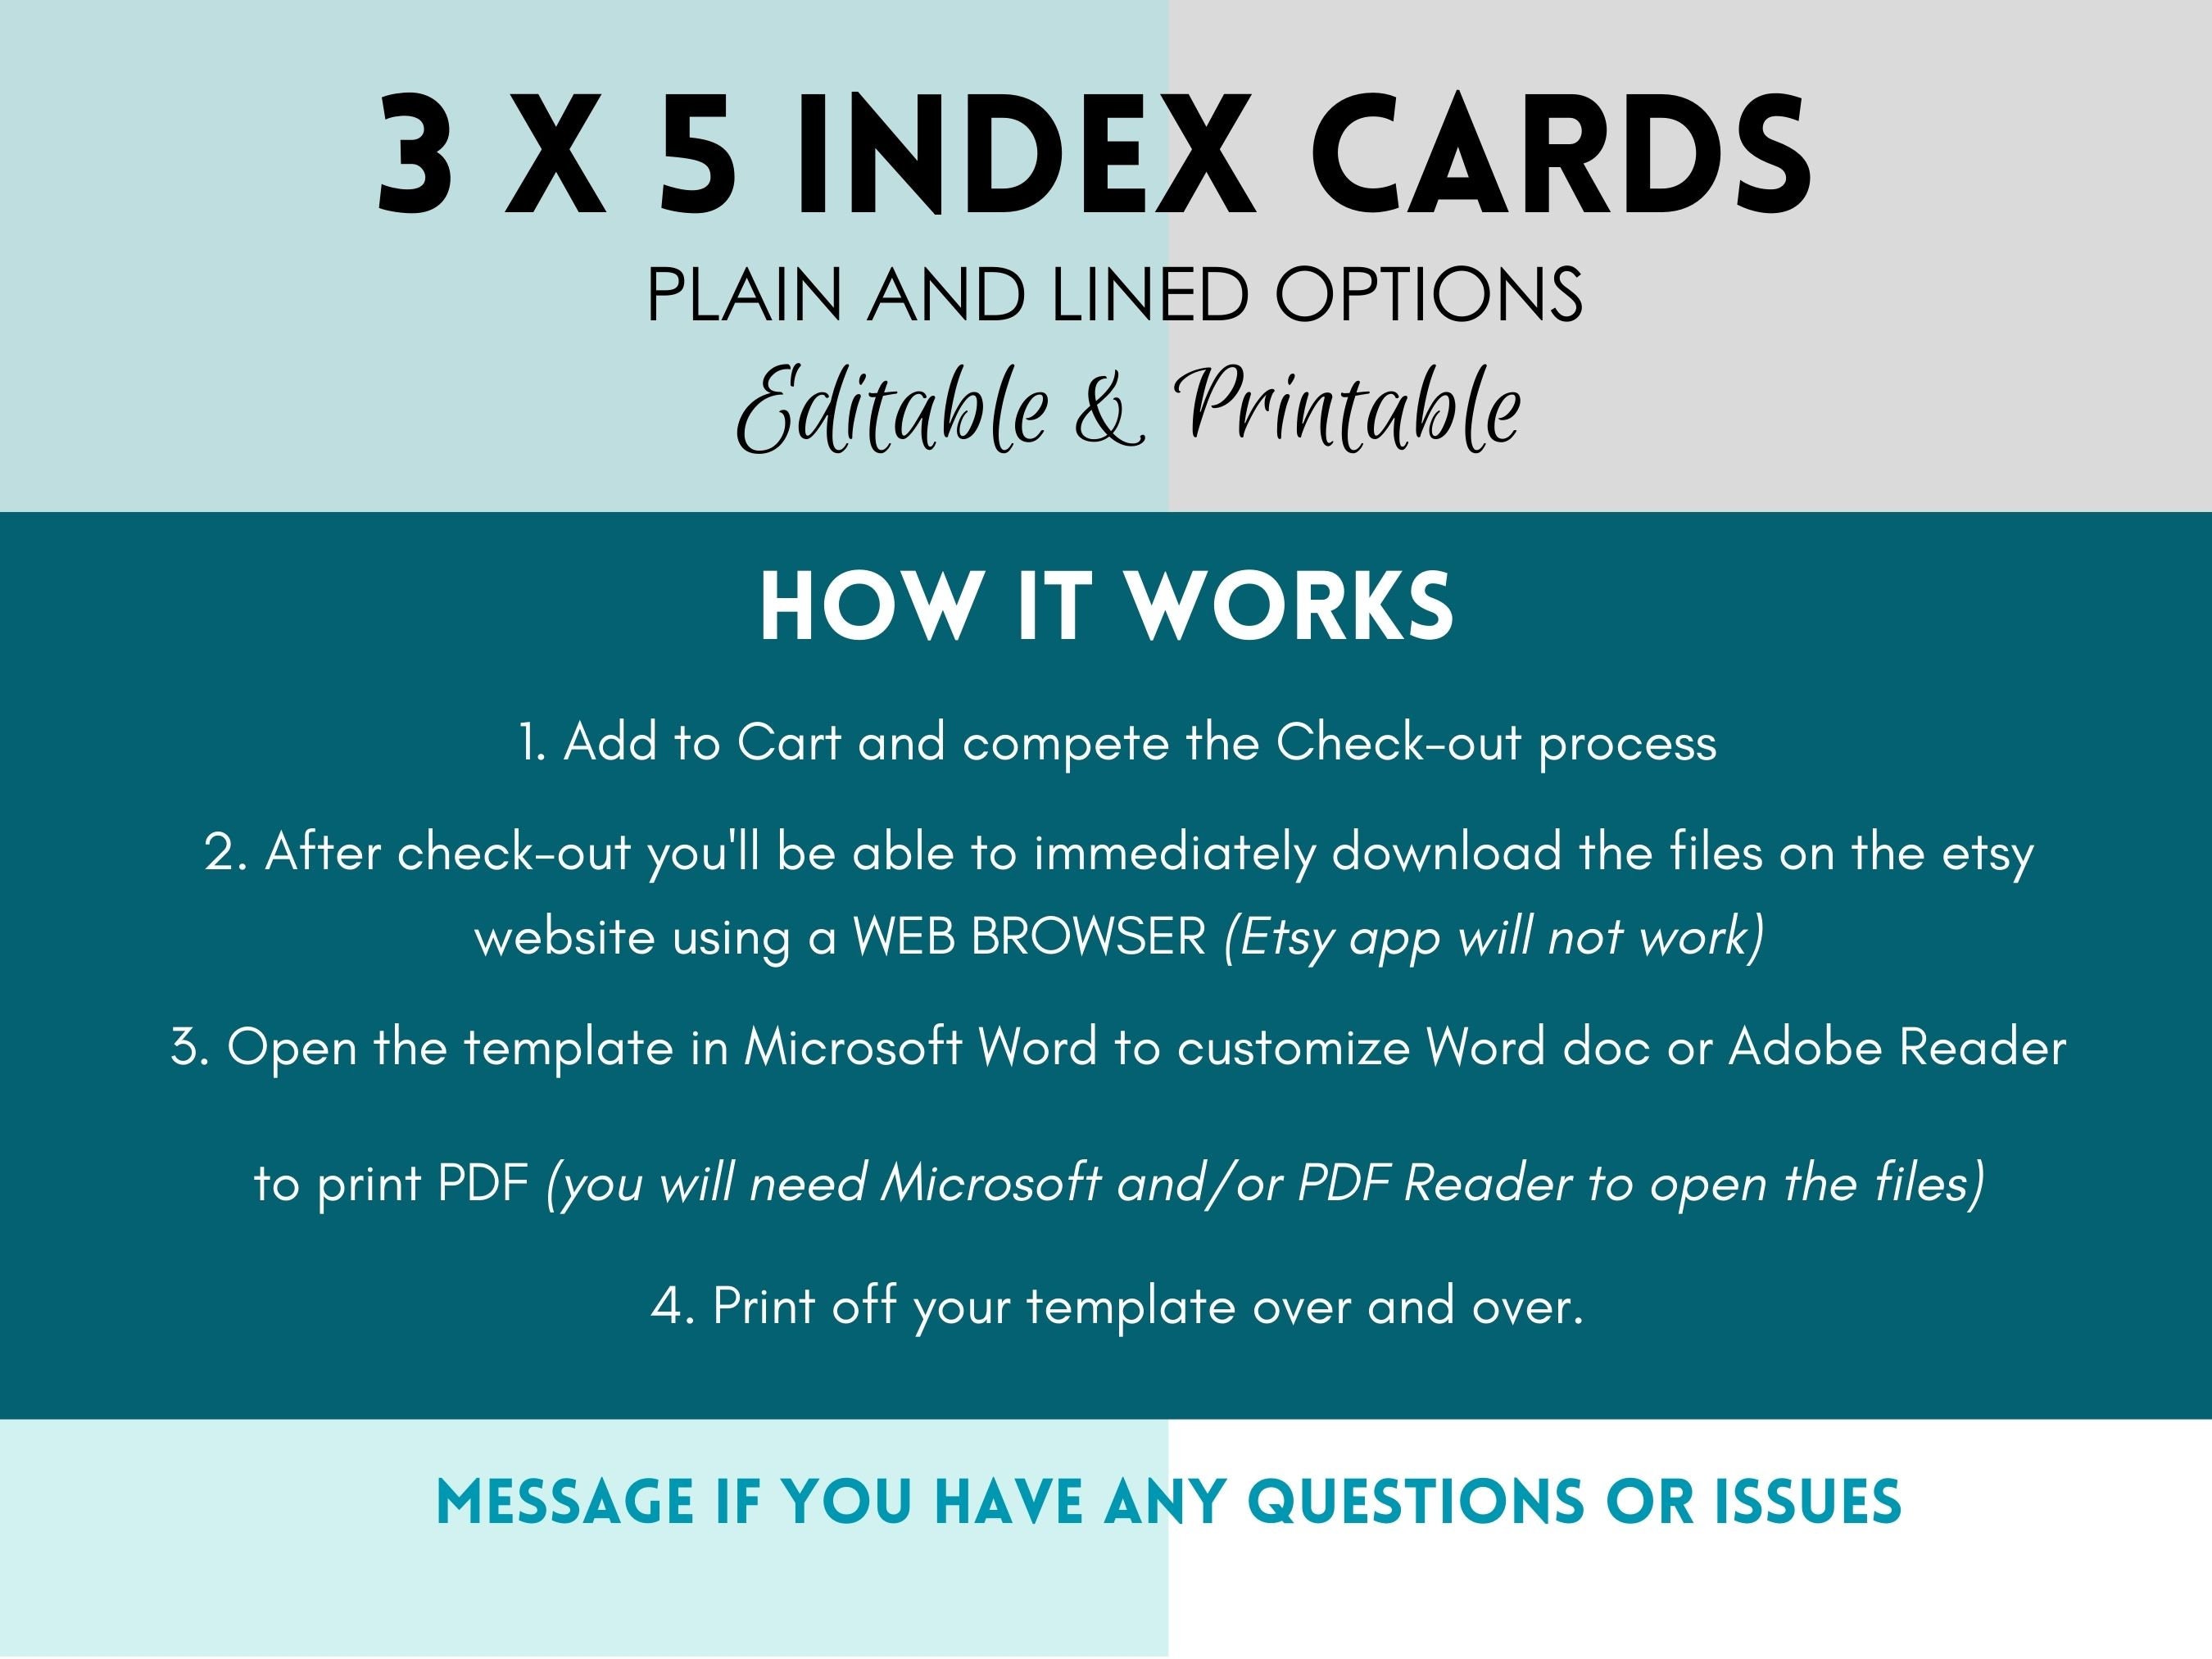 Printable 4x6 Index Card. Printable Note Cards. Printable Index Cards.  Blank Index Cards. Index Card PDF. Index Card Template. -  Israel